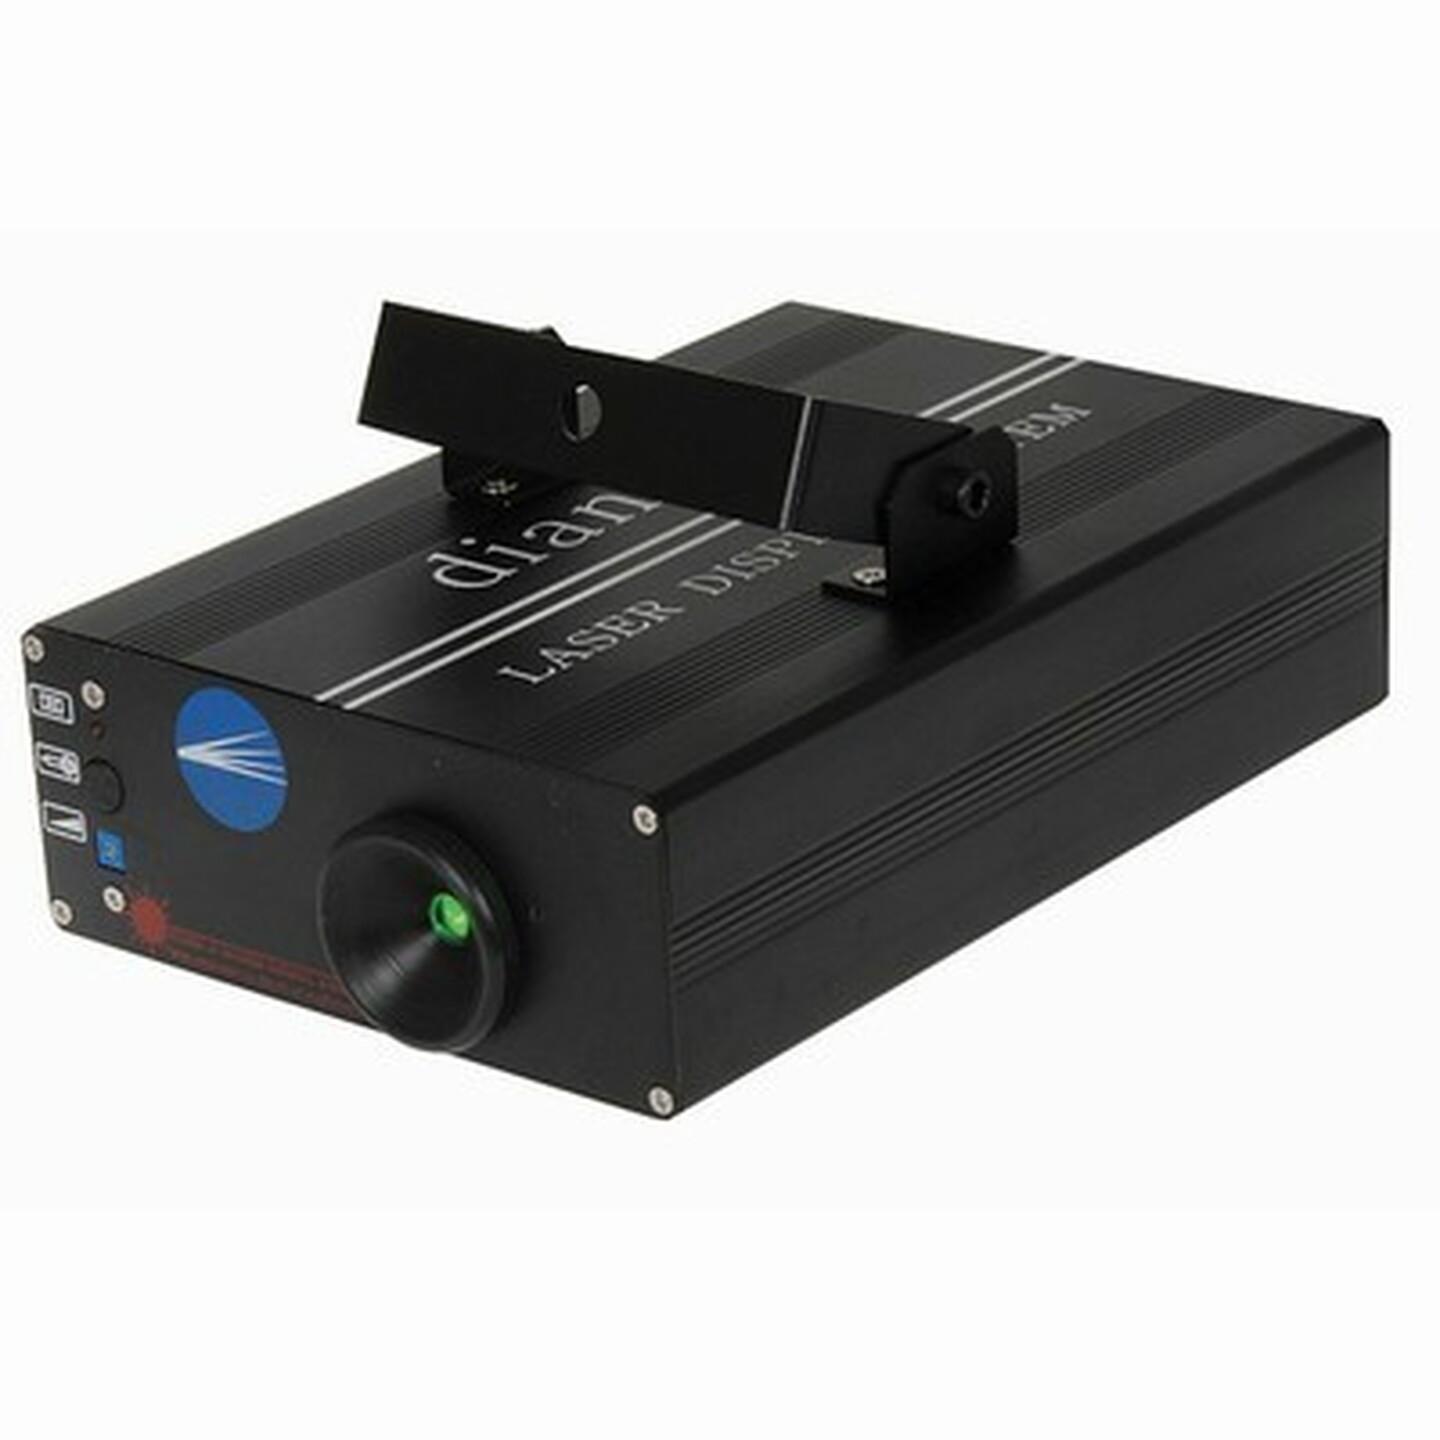 Green Laser Display System